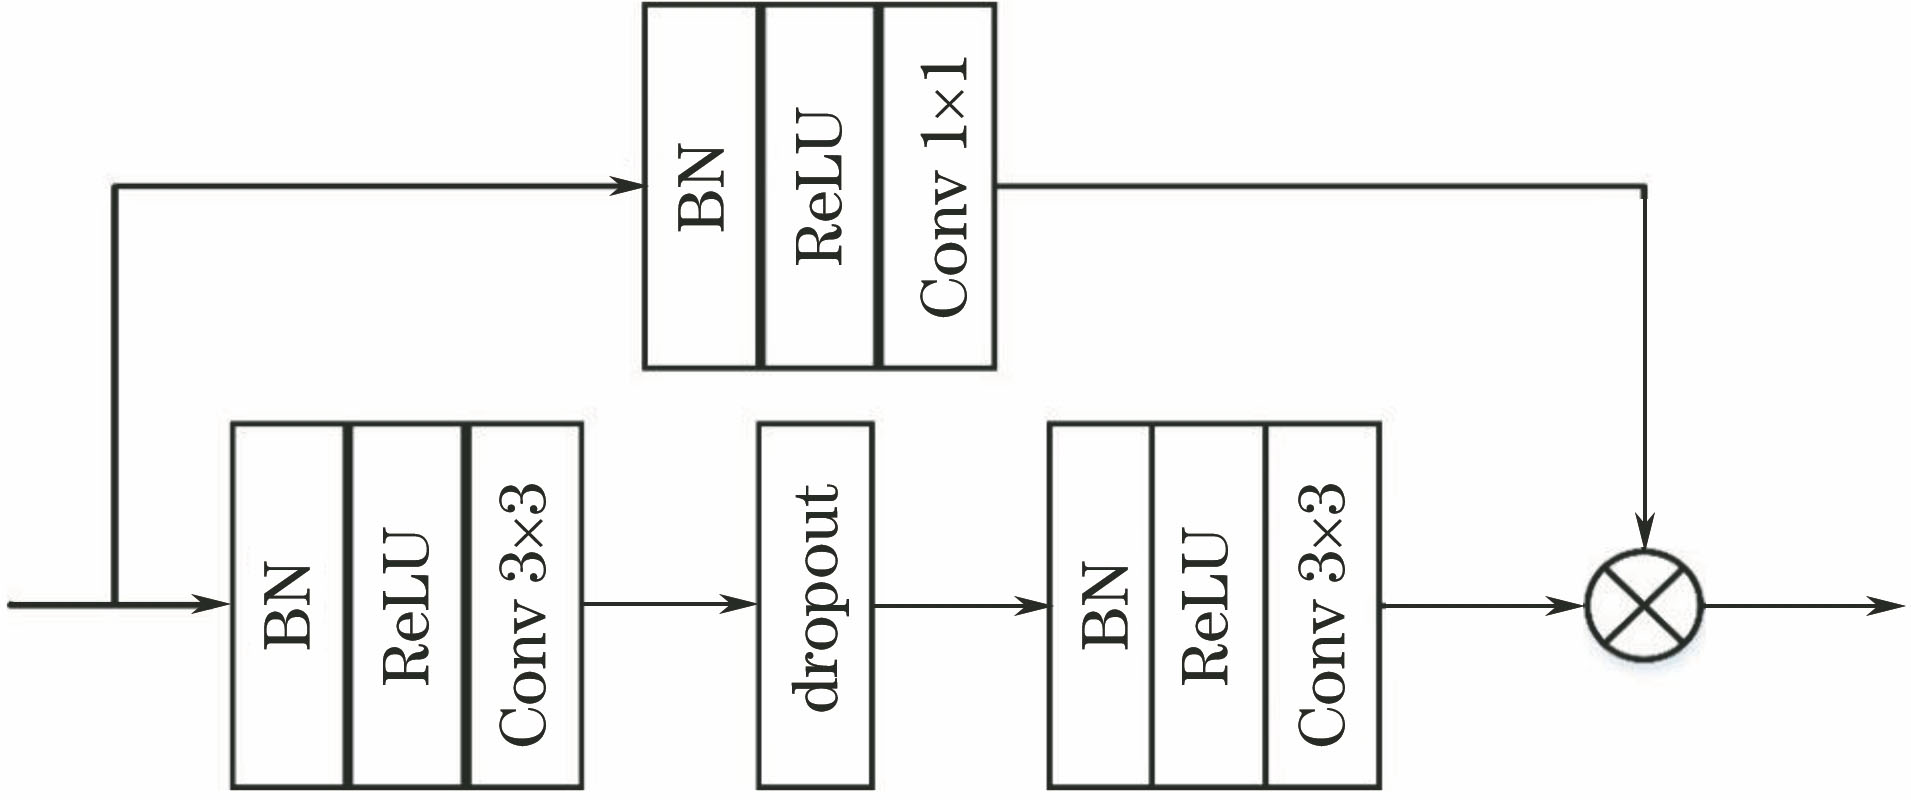 Structural diagram of residual block